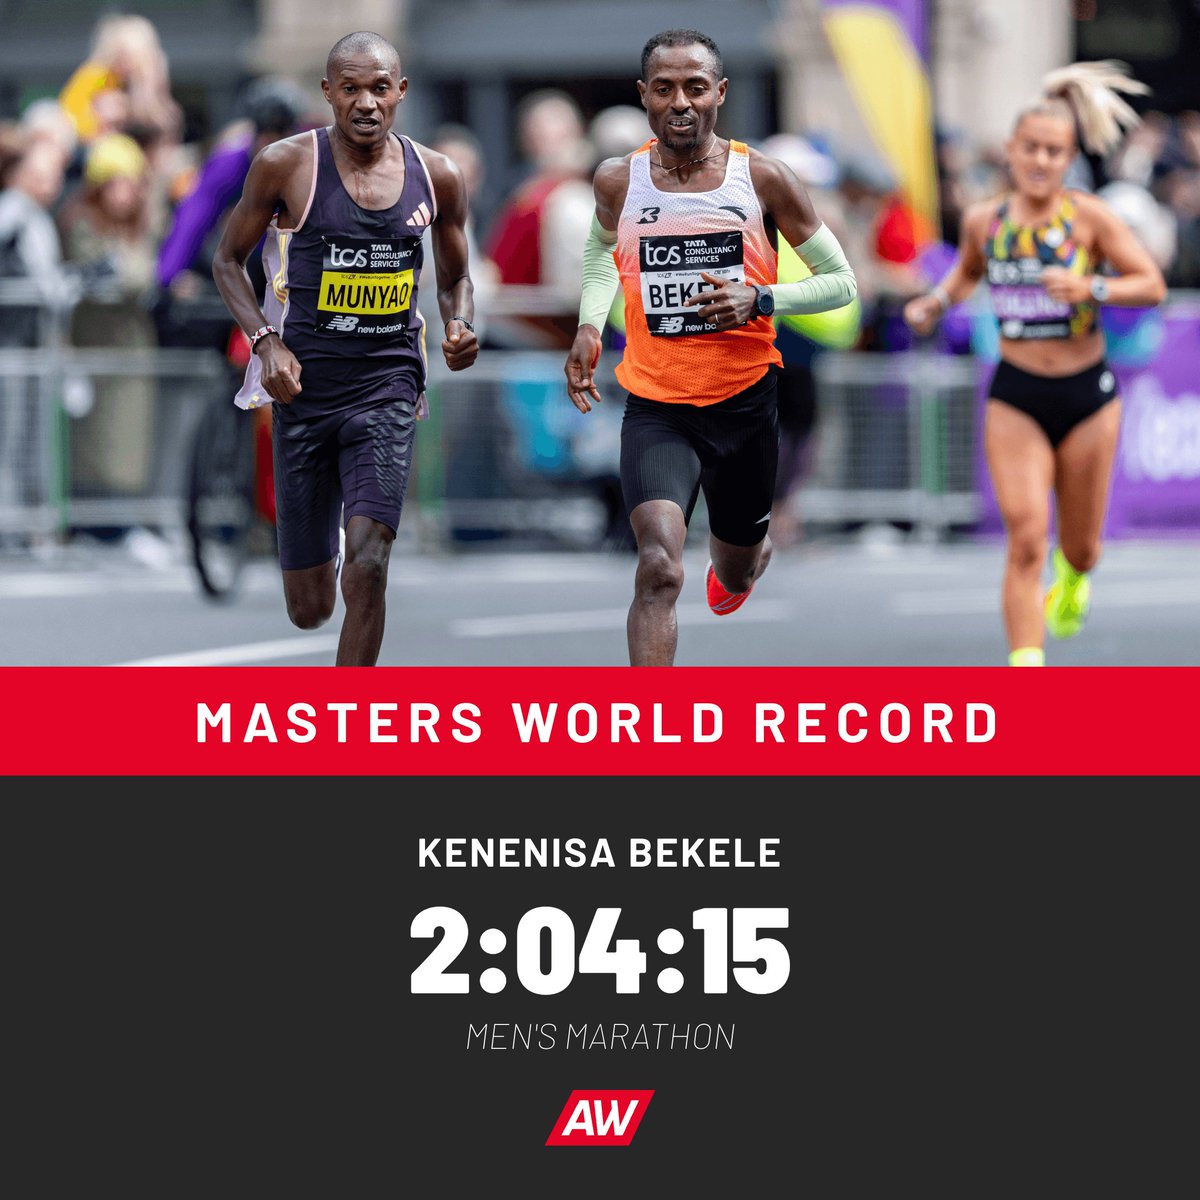 Kenenisa breaks the marathon world record for the masters age category at London Marathon.